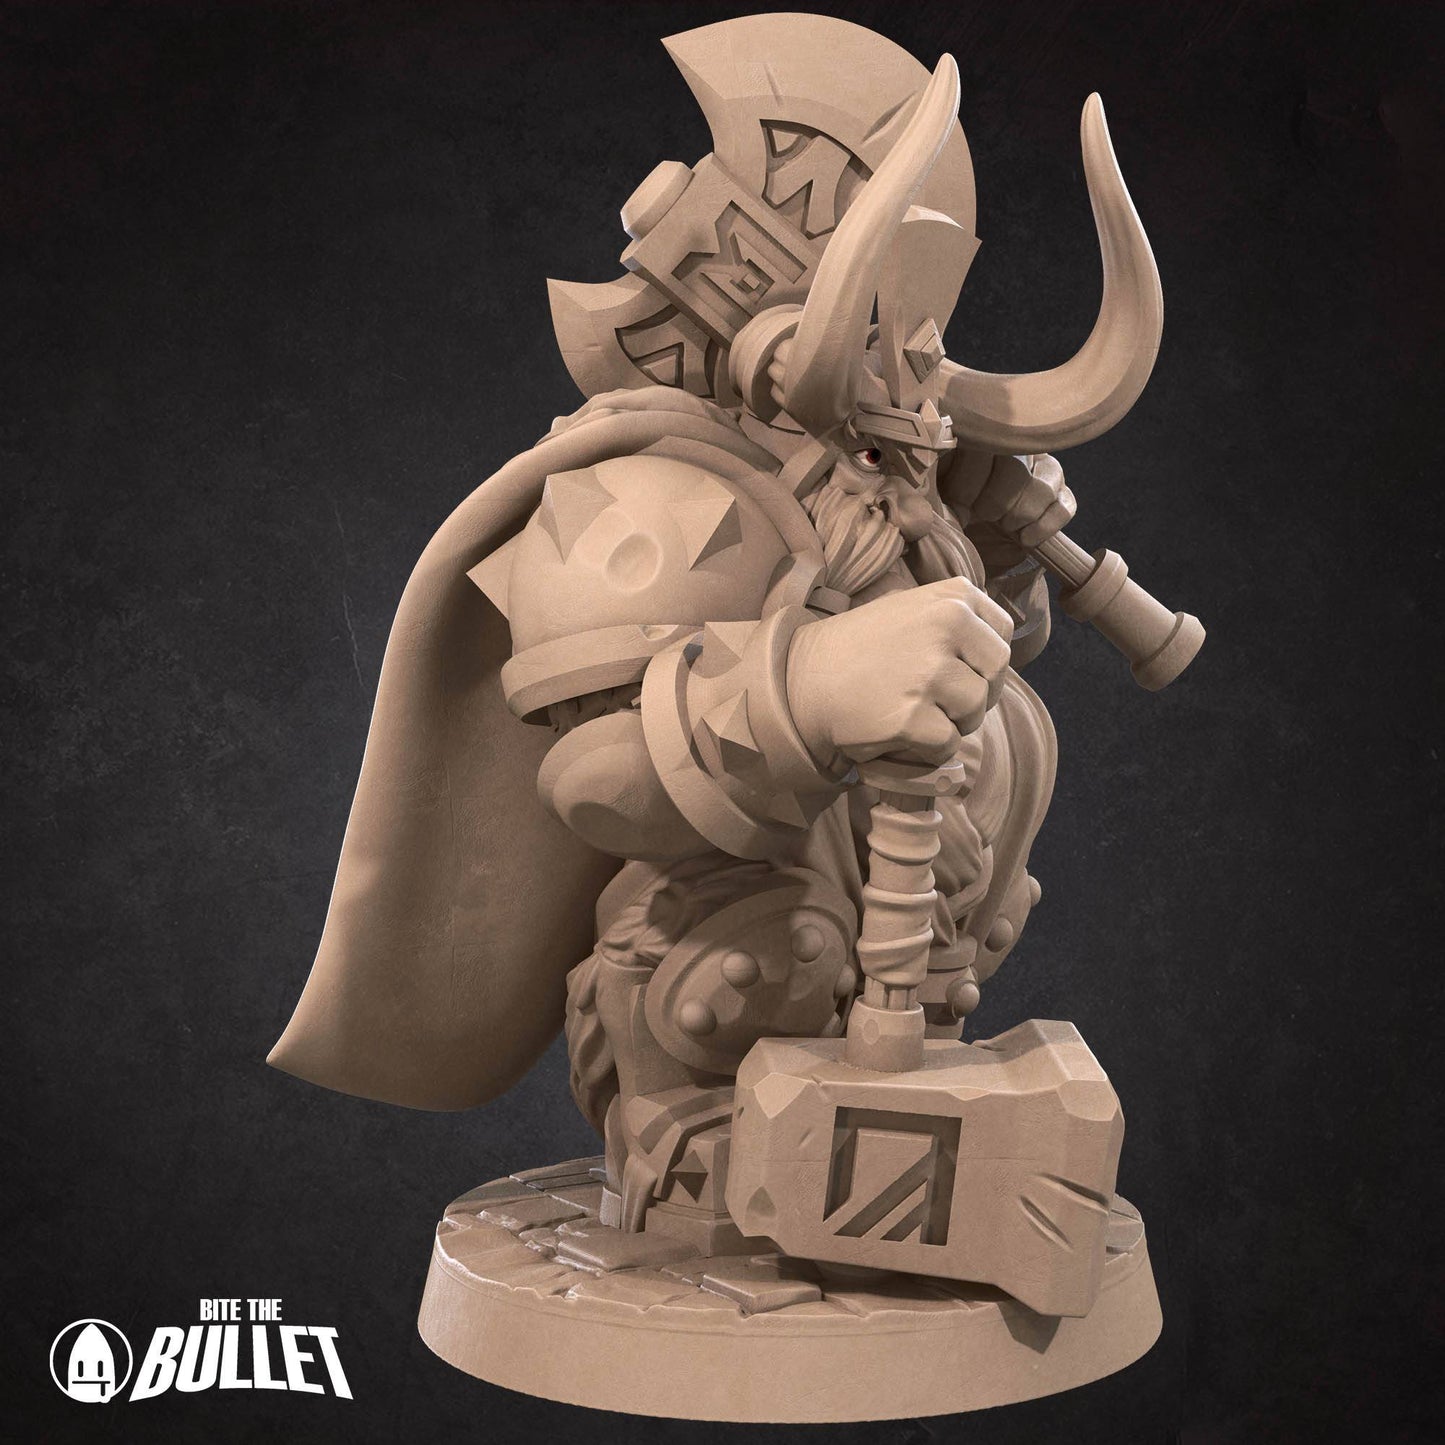 Dwarf King | D&D Miniature TTRPG Character | Bite the Bullet - Tattles Told 3D